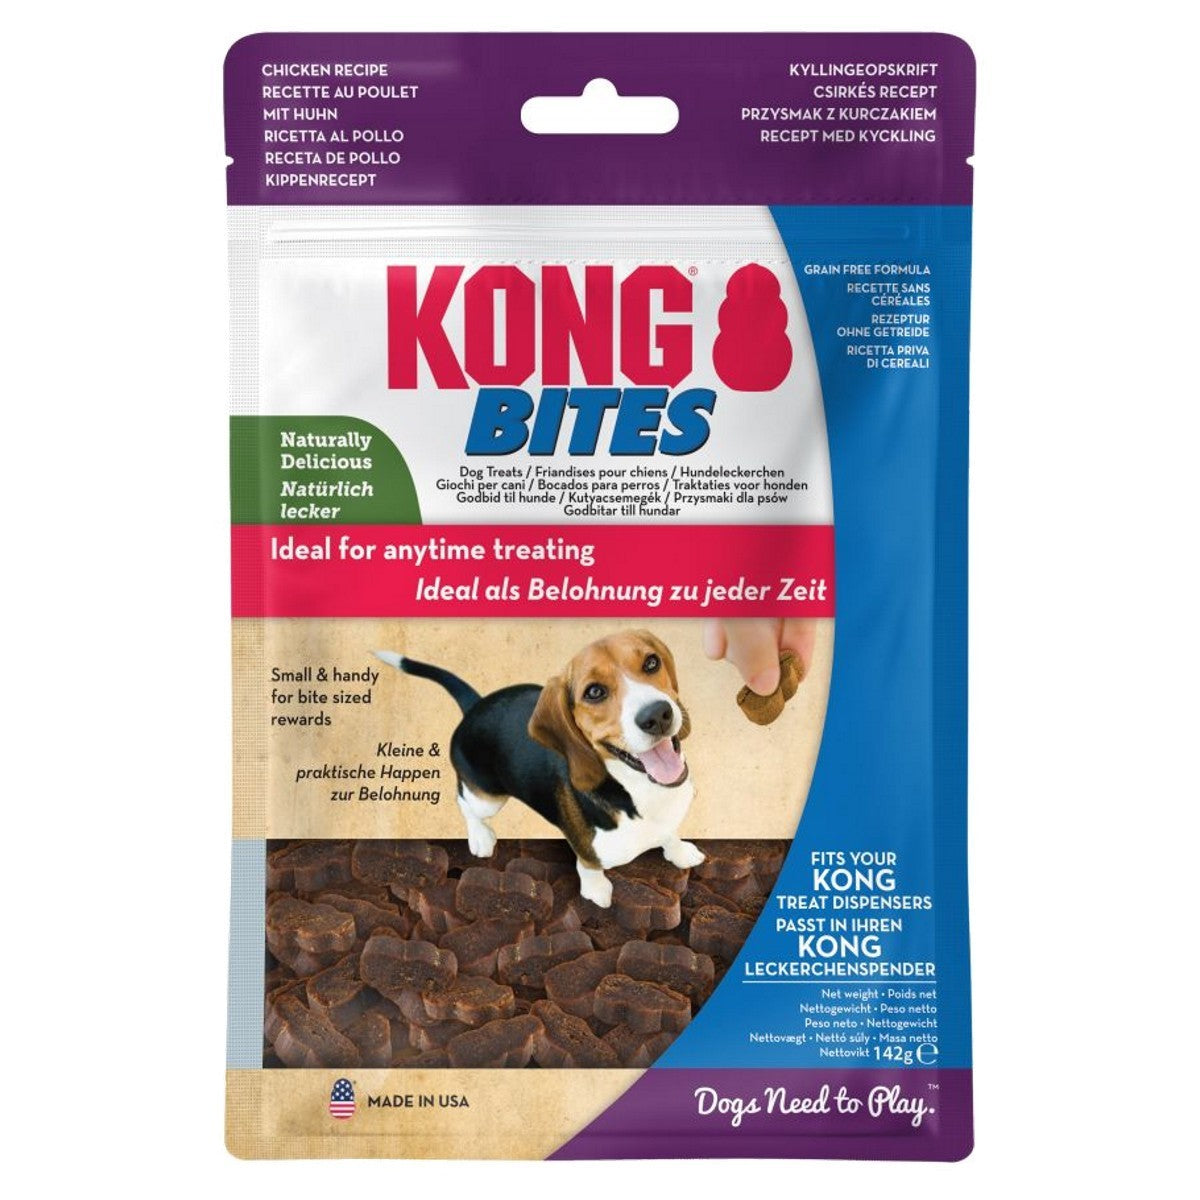 KONG Bites (Chicken) 140g Dog Treats